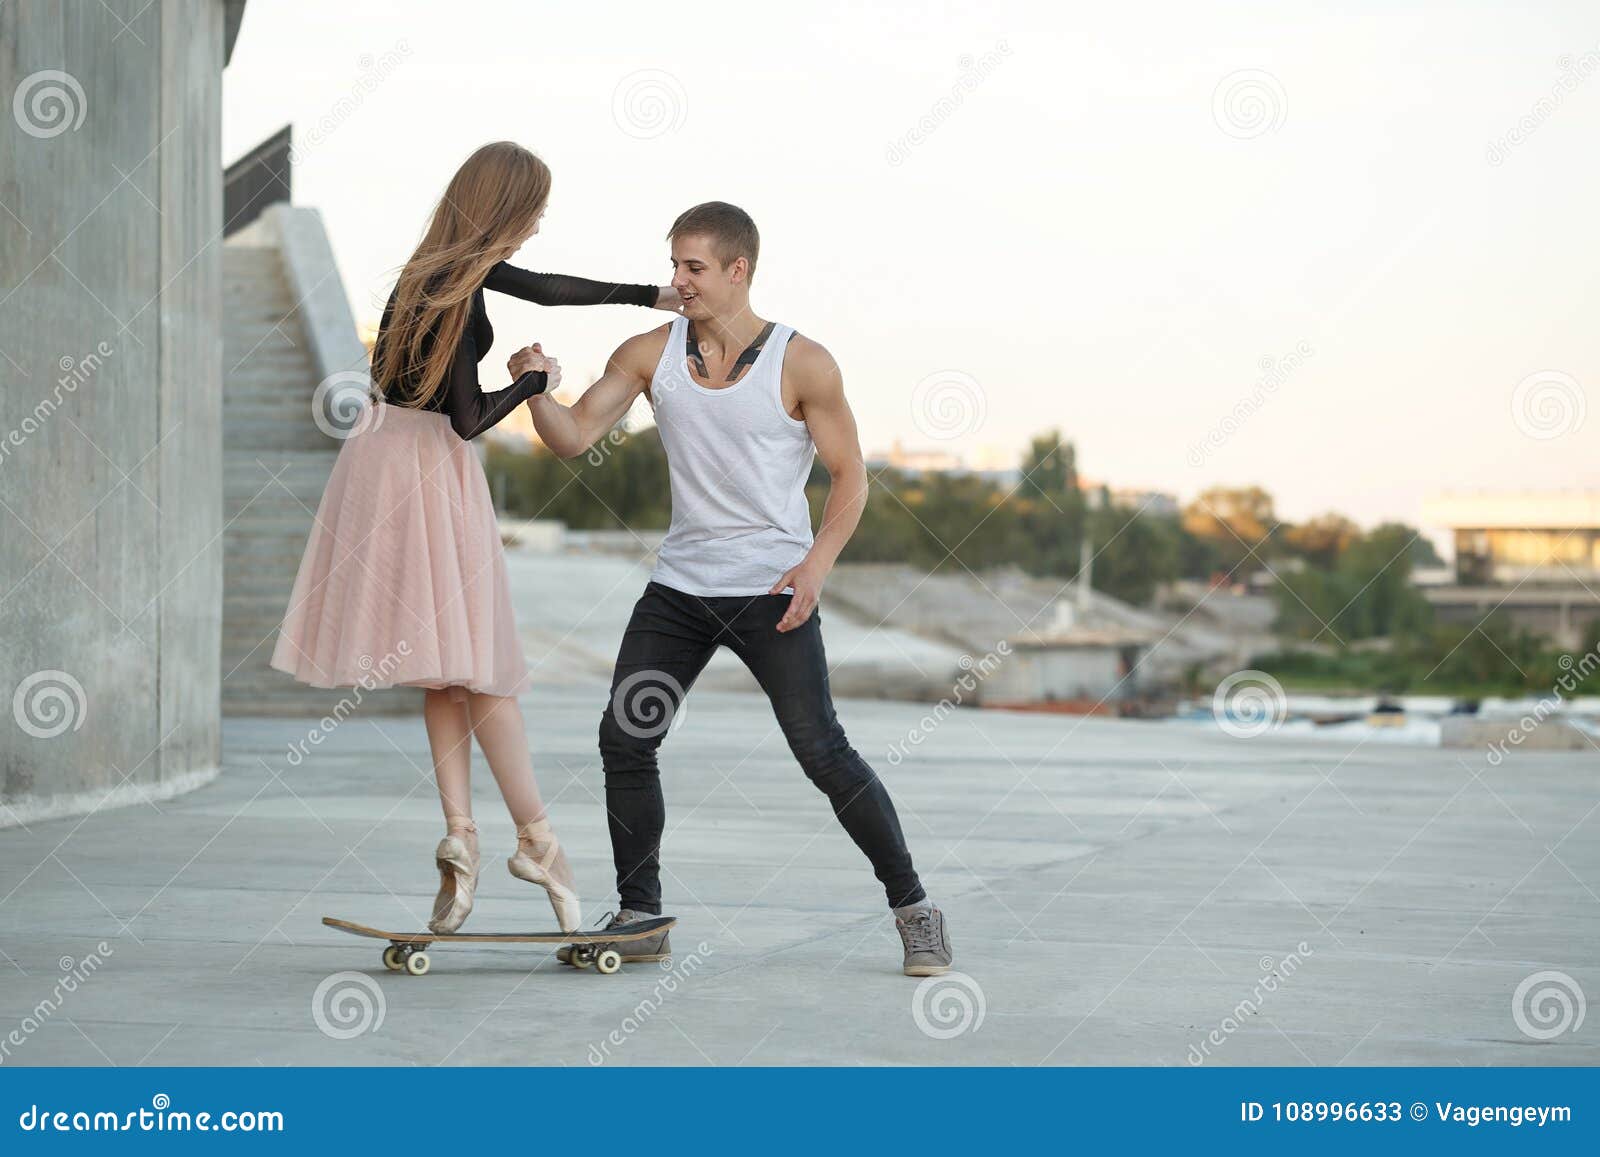 afvisning ingen overse Ballerina on a Skateboard. the Guy Helps Stock Image - Image of ballerina,  grace: 108996633